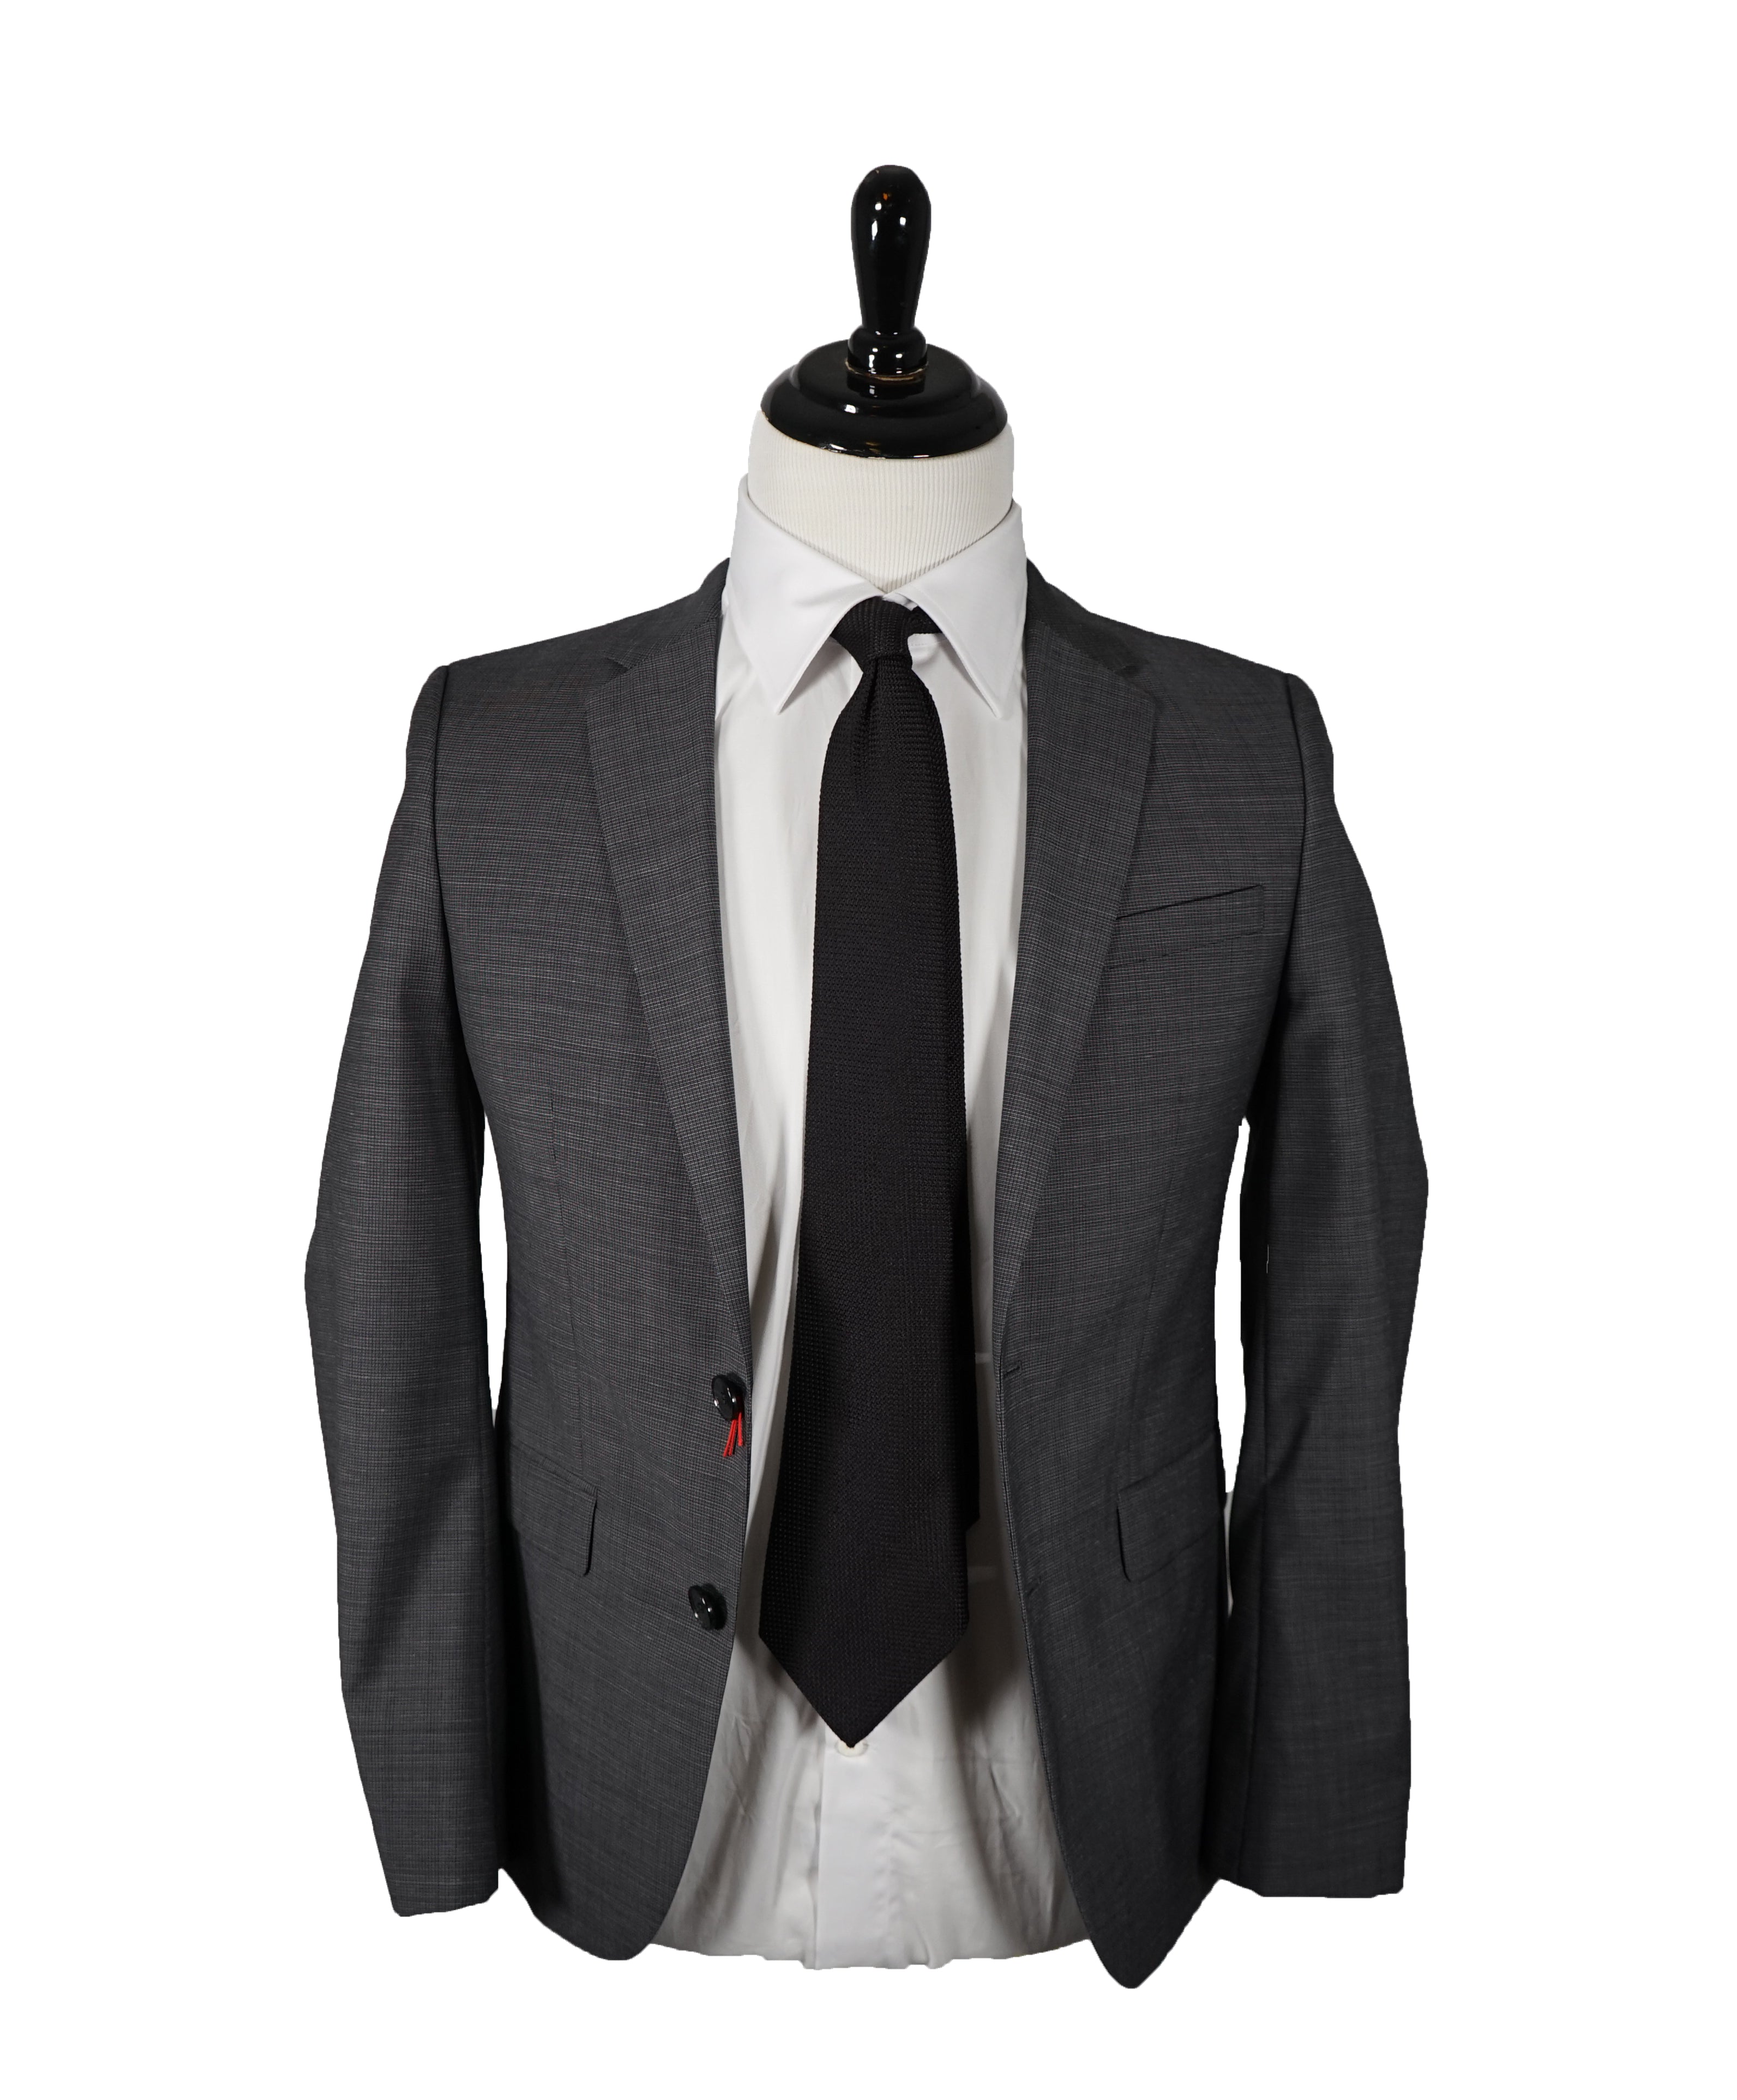 HUGO BOSS - Notch Lapel Microcheck Suit 